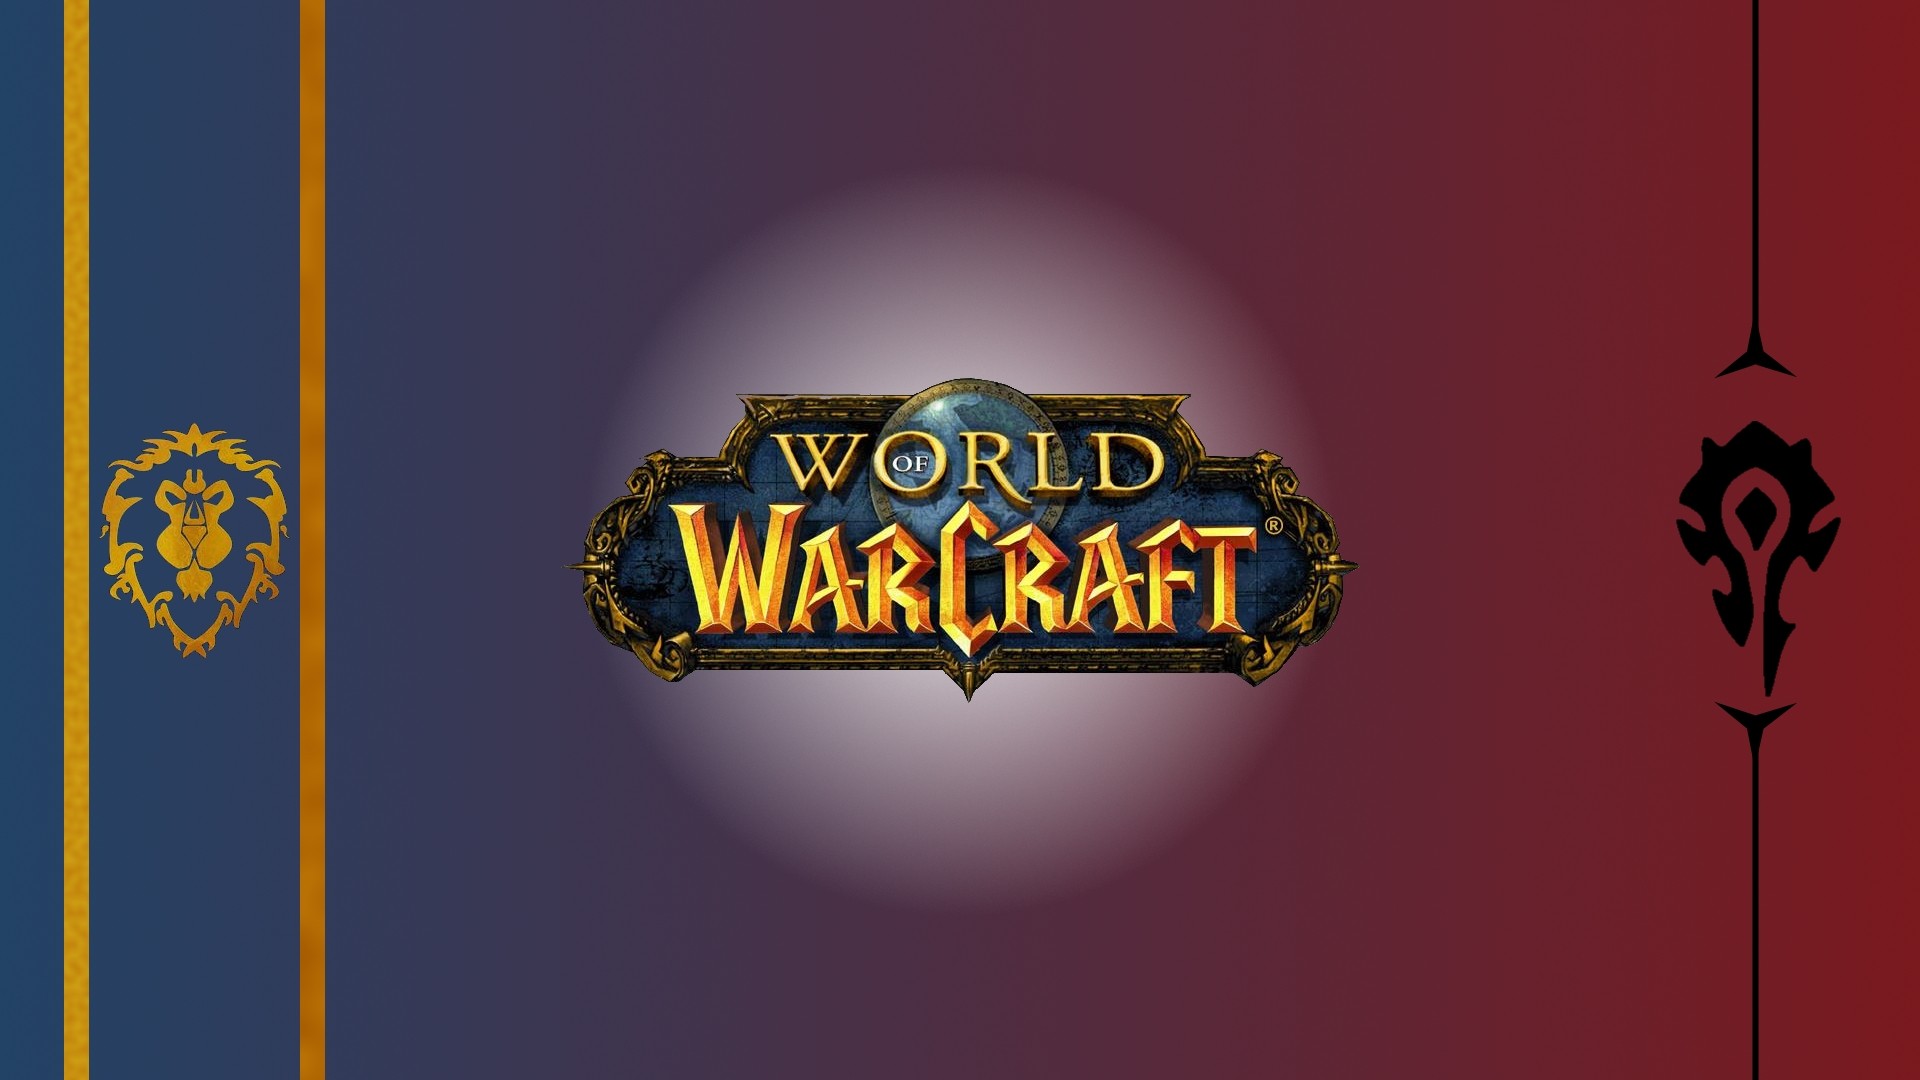 World of Warcraft, Alliance, Horde, Blue, Red, Black, Lion, PC gaming Wallpaper